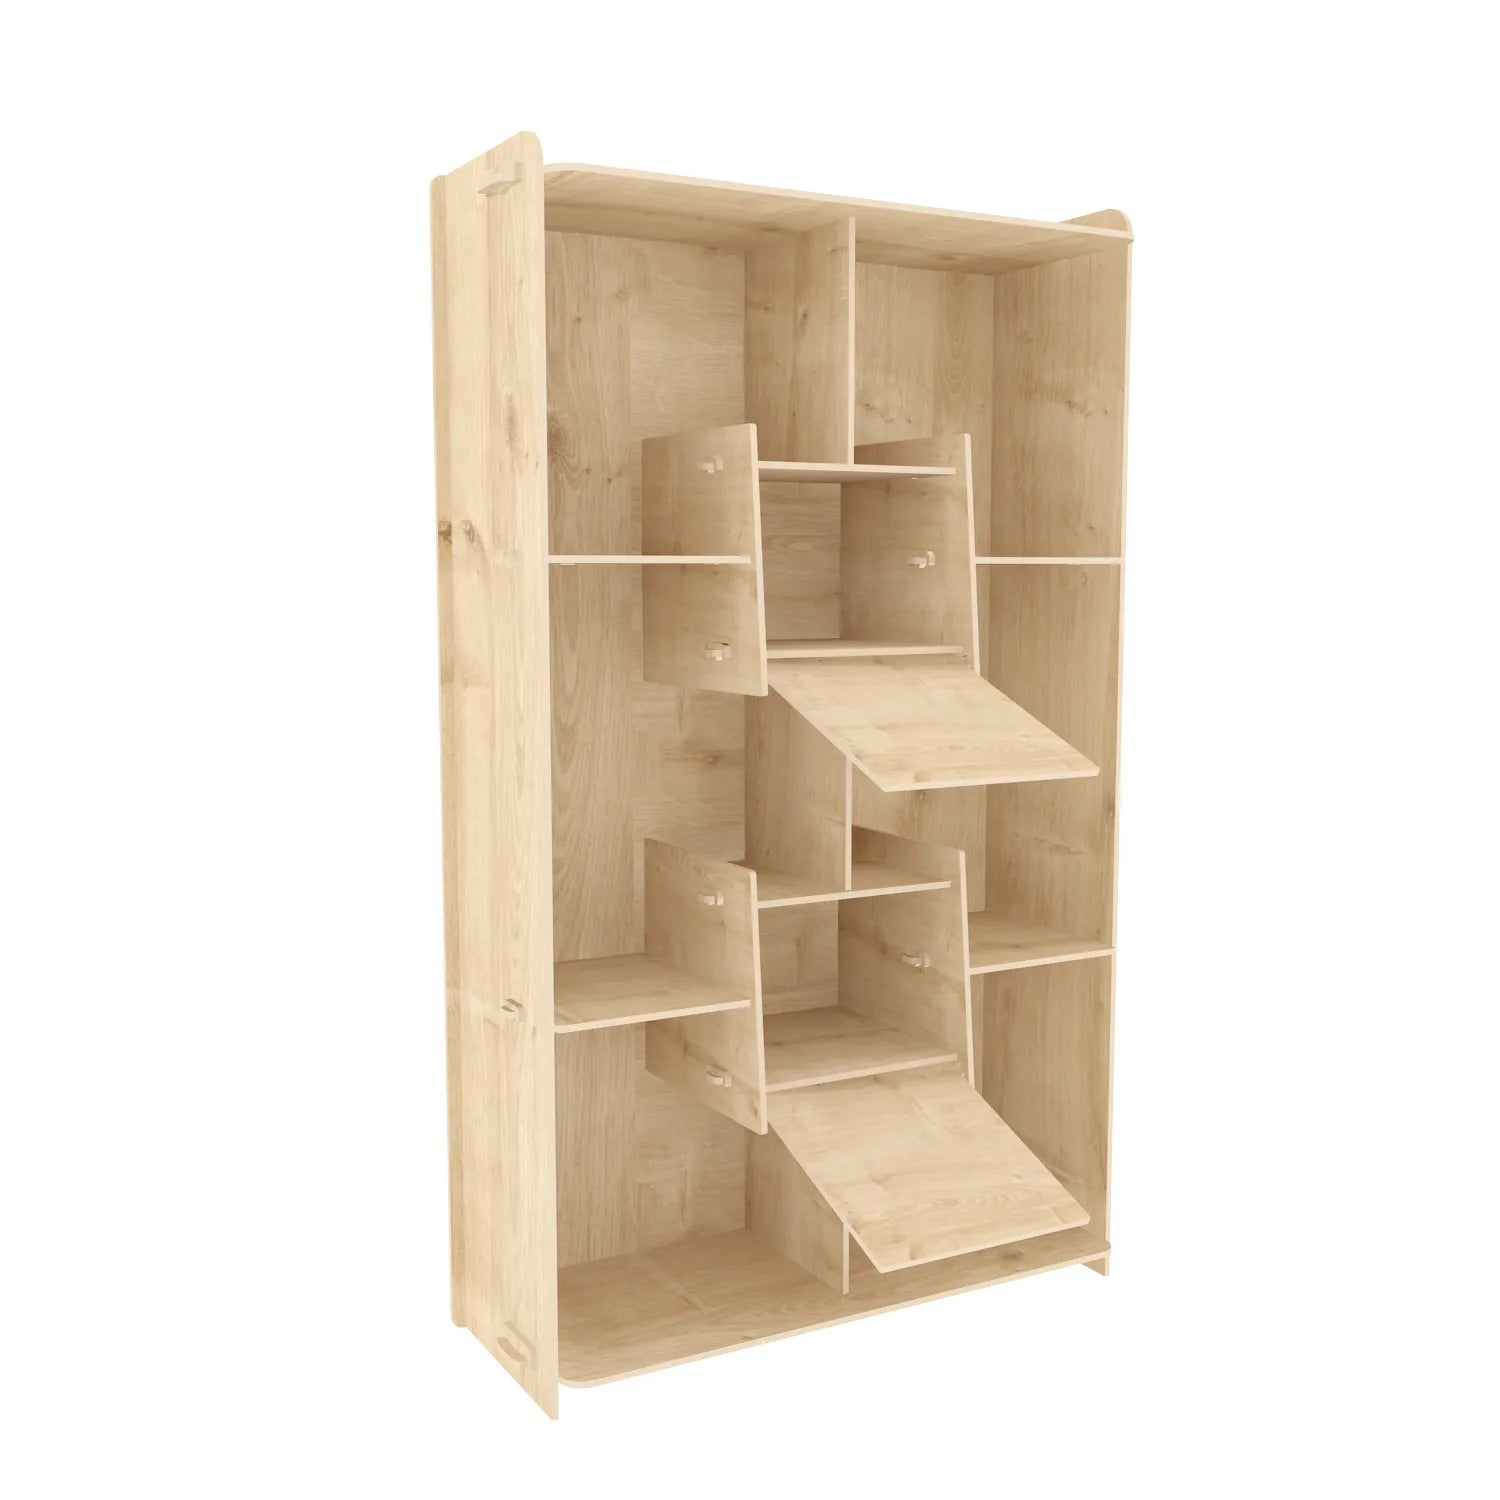 Pana 54" Tall MDF Bookcase | Bookshelf | Screwless Design